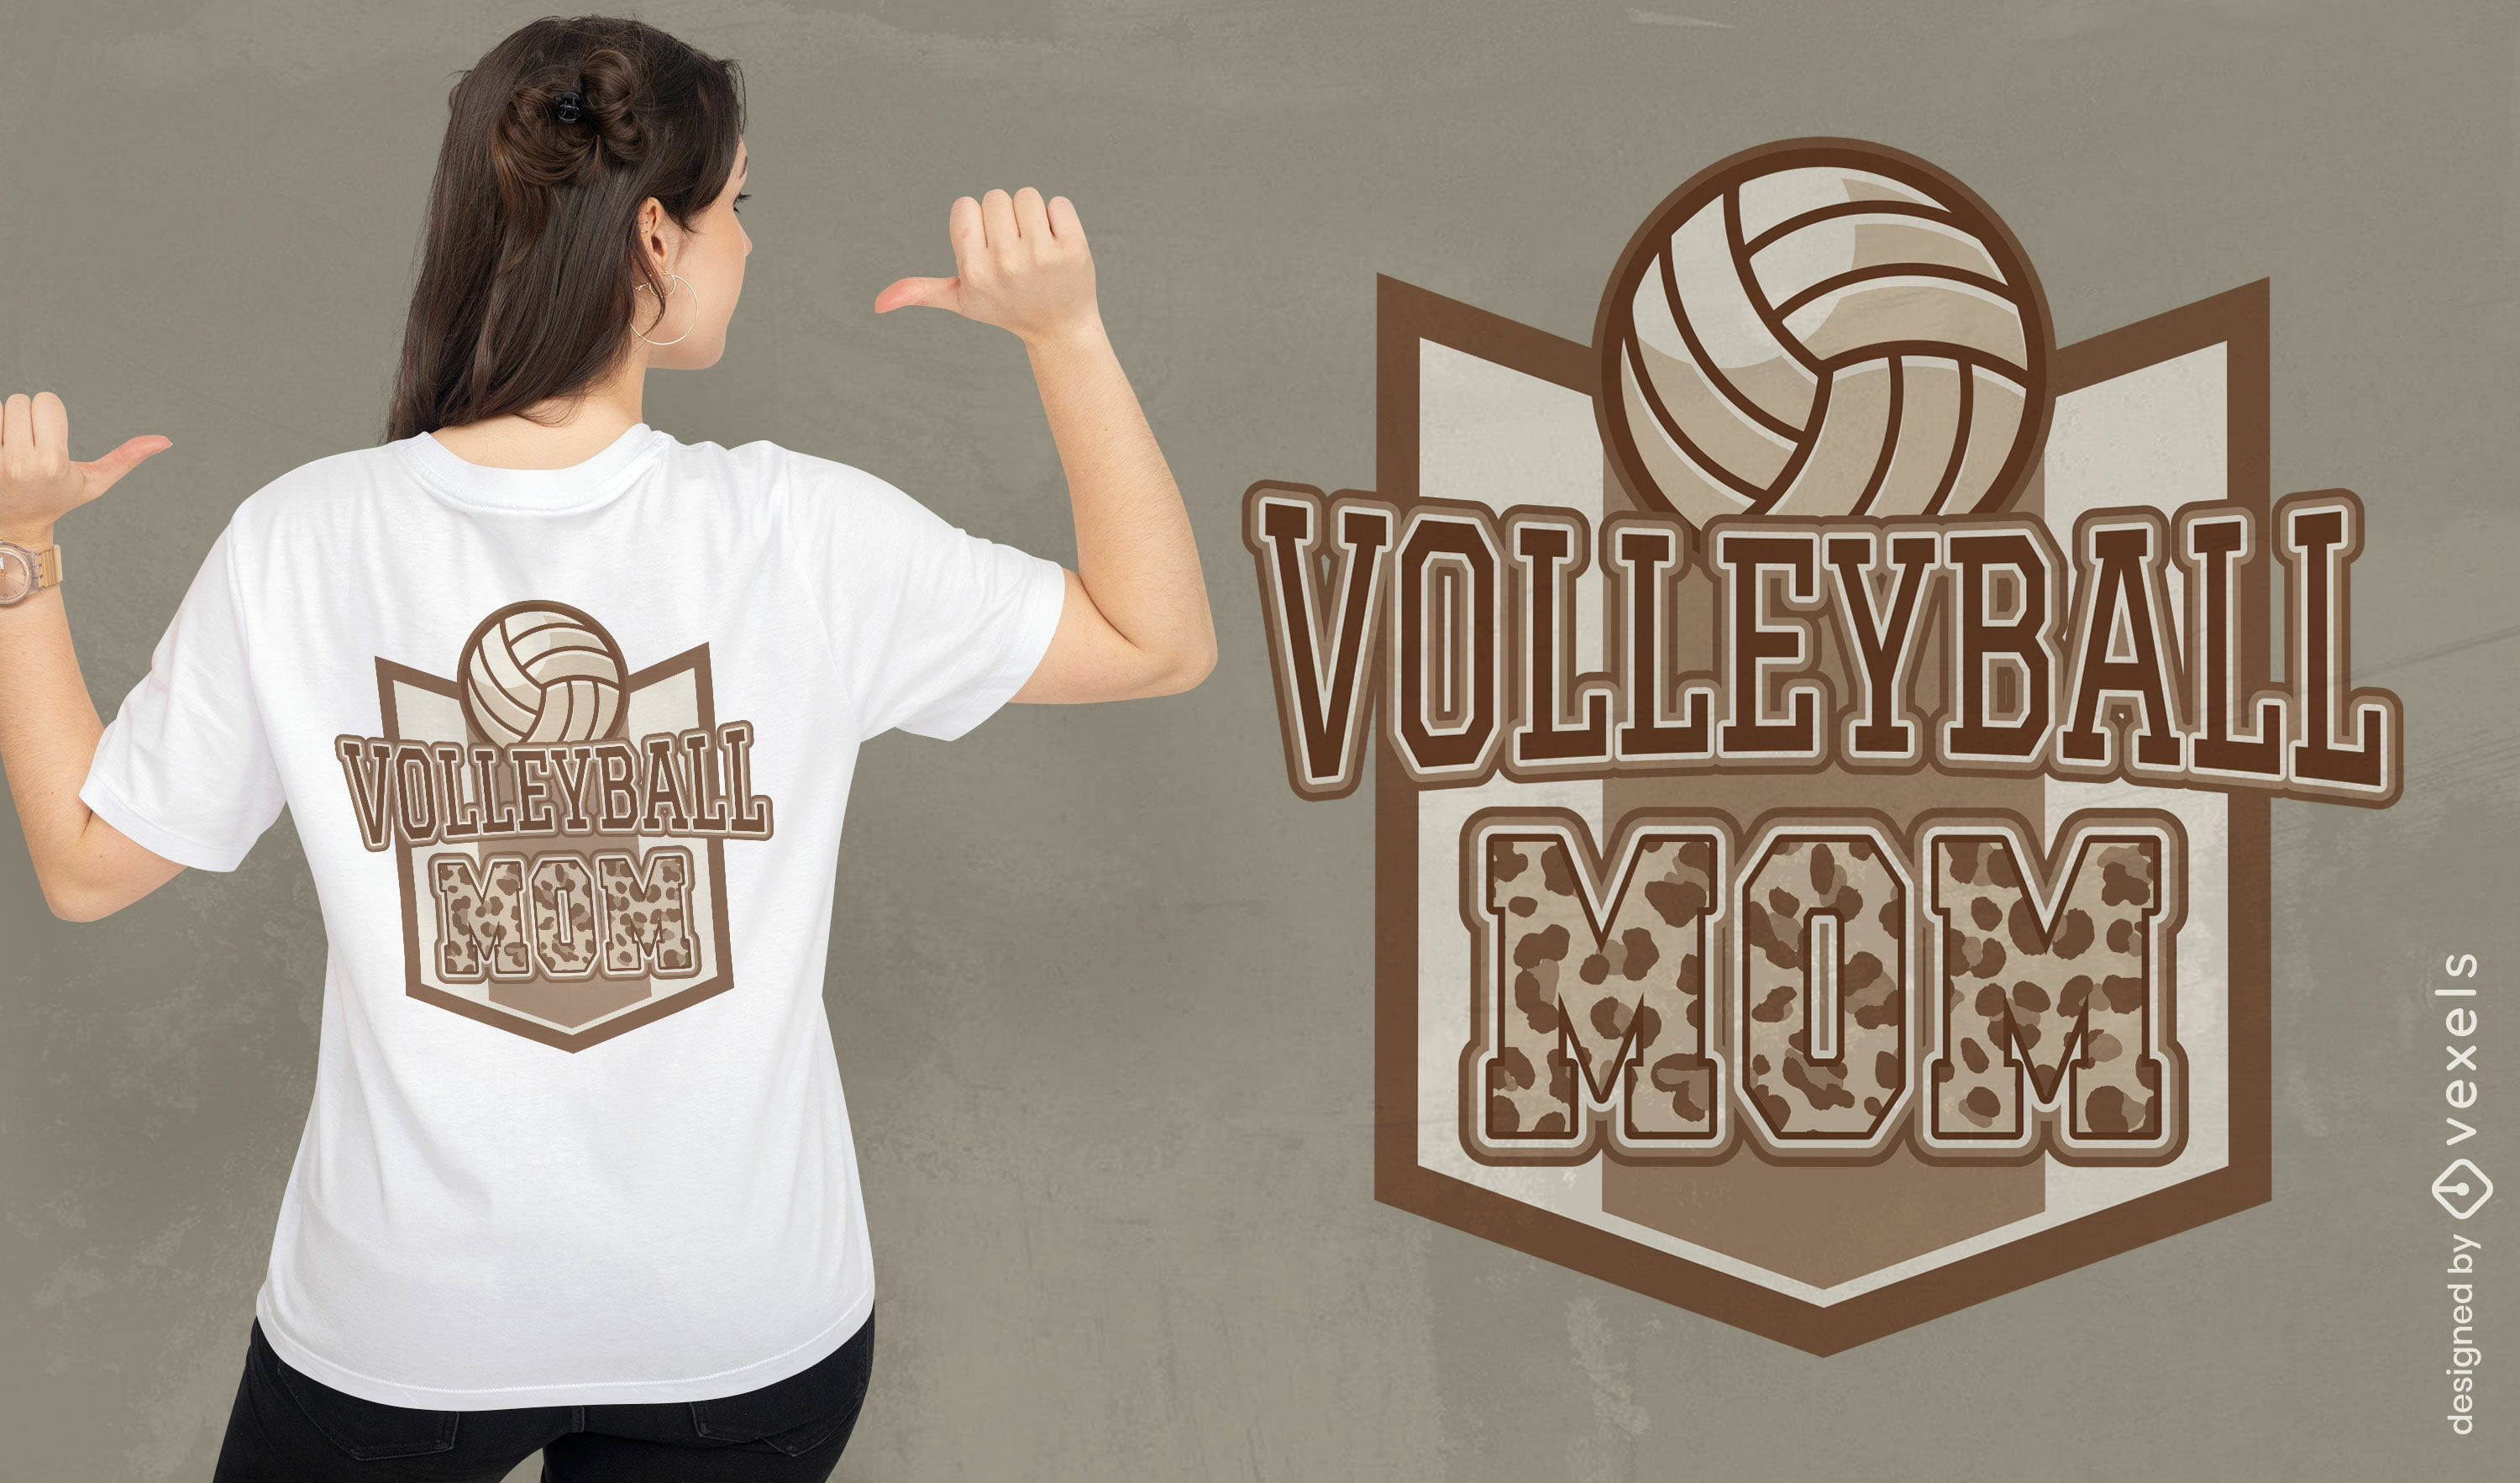 Animal print volleyball mom t-shirt design